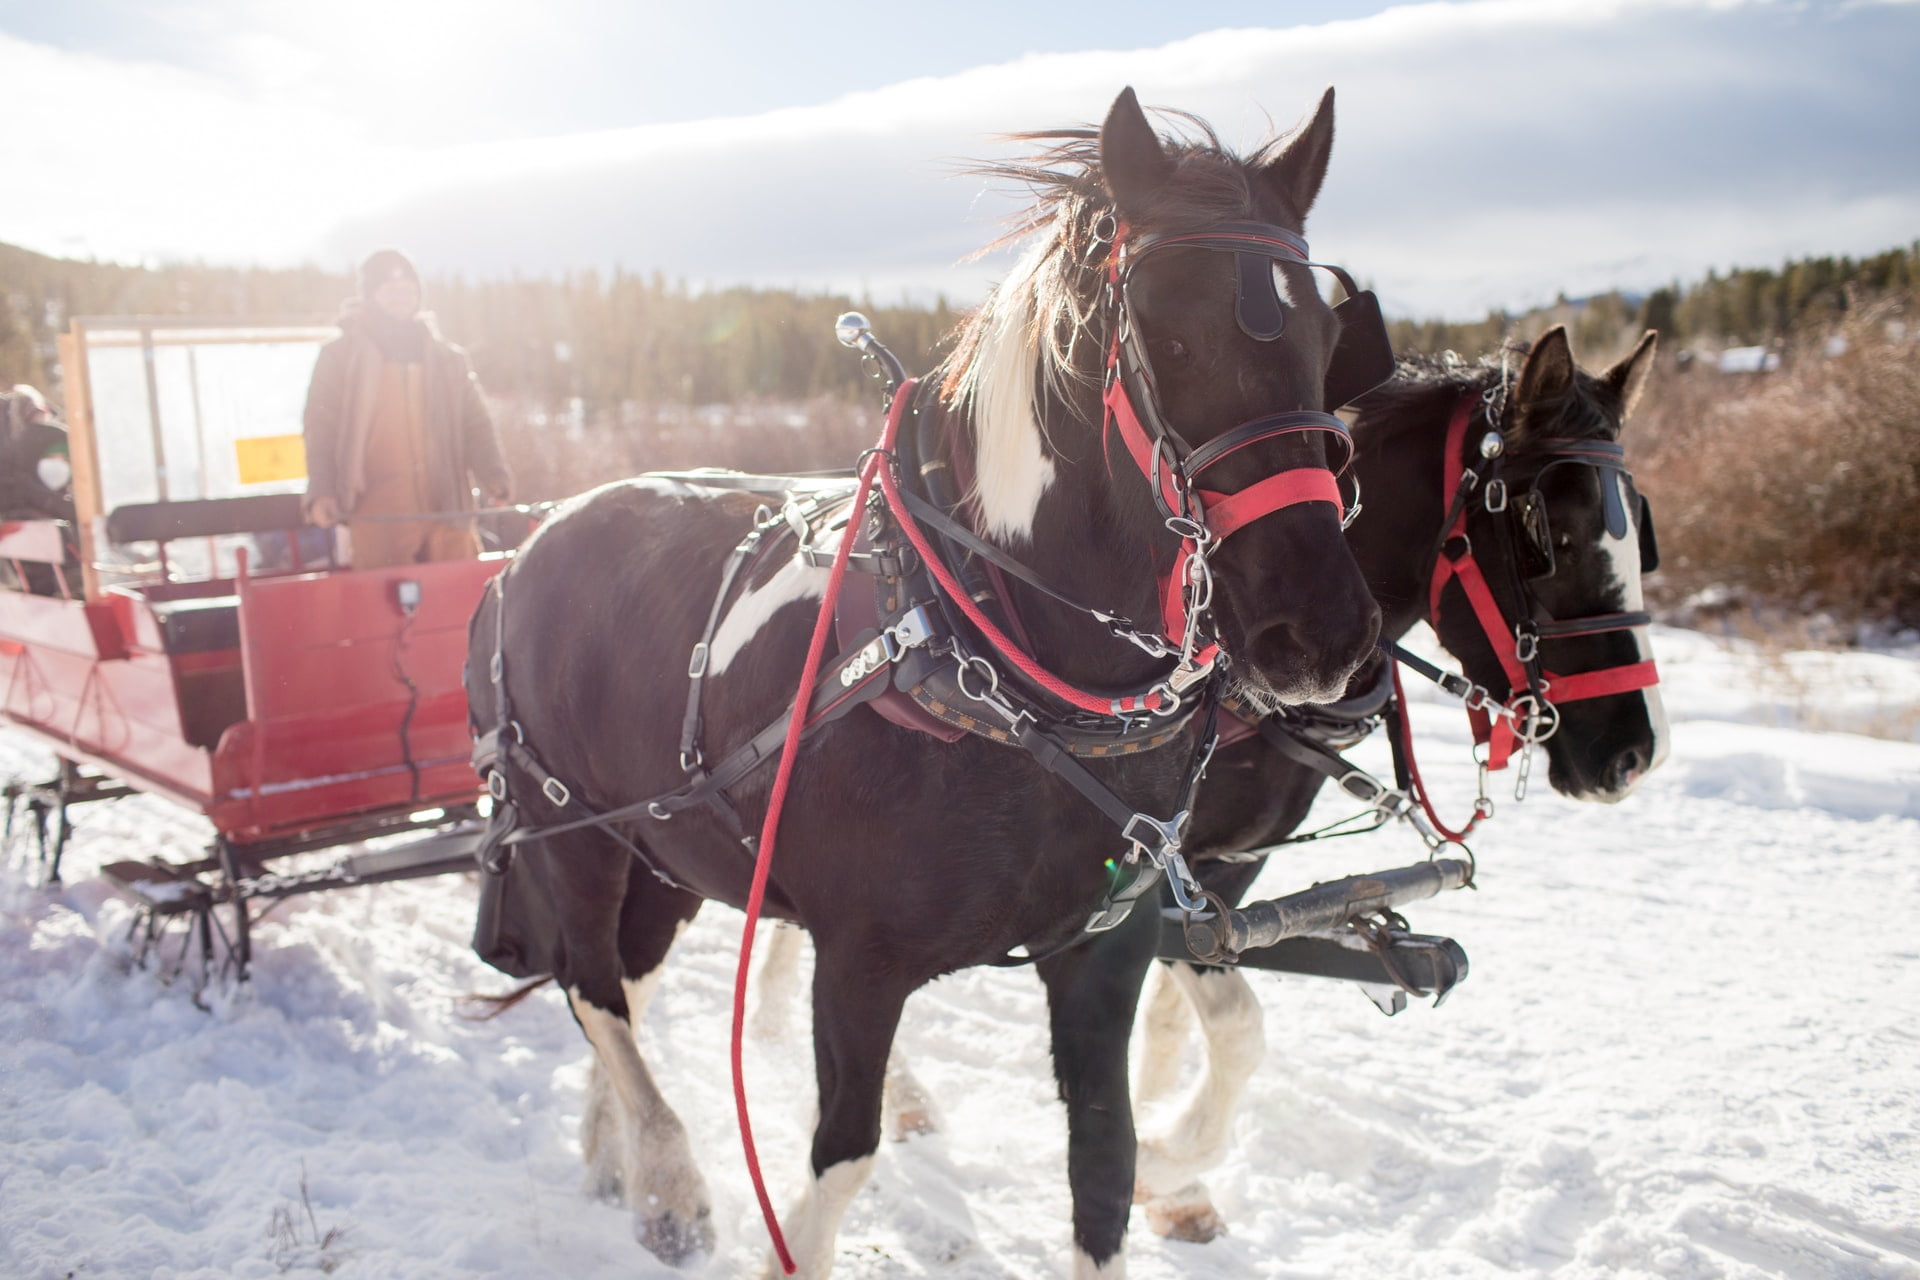 Company sleigh ride